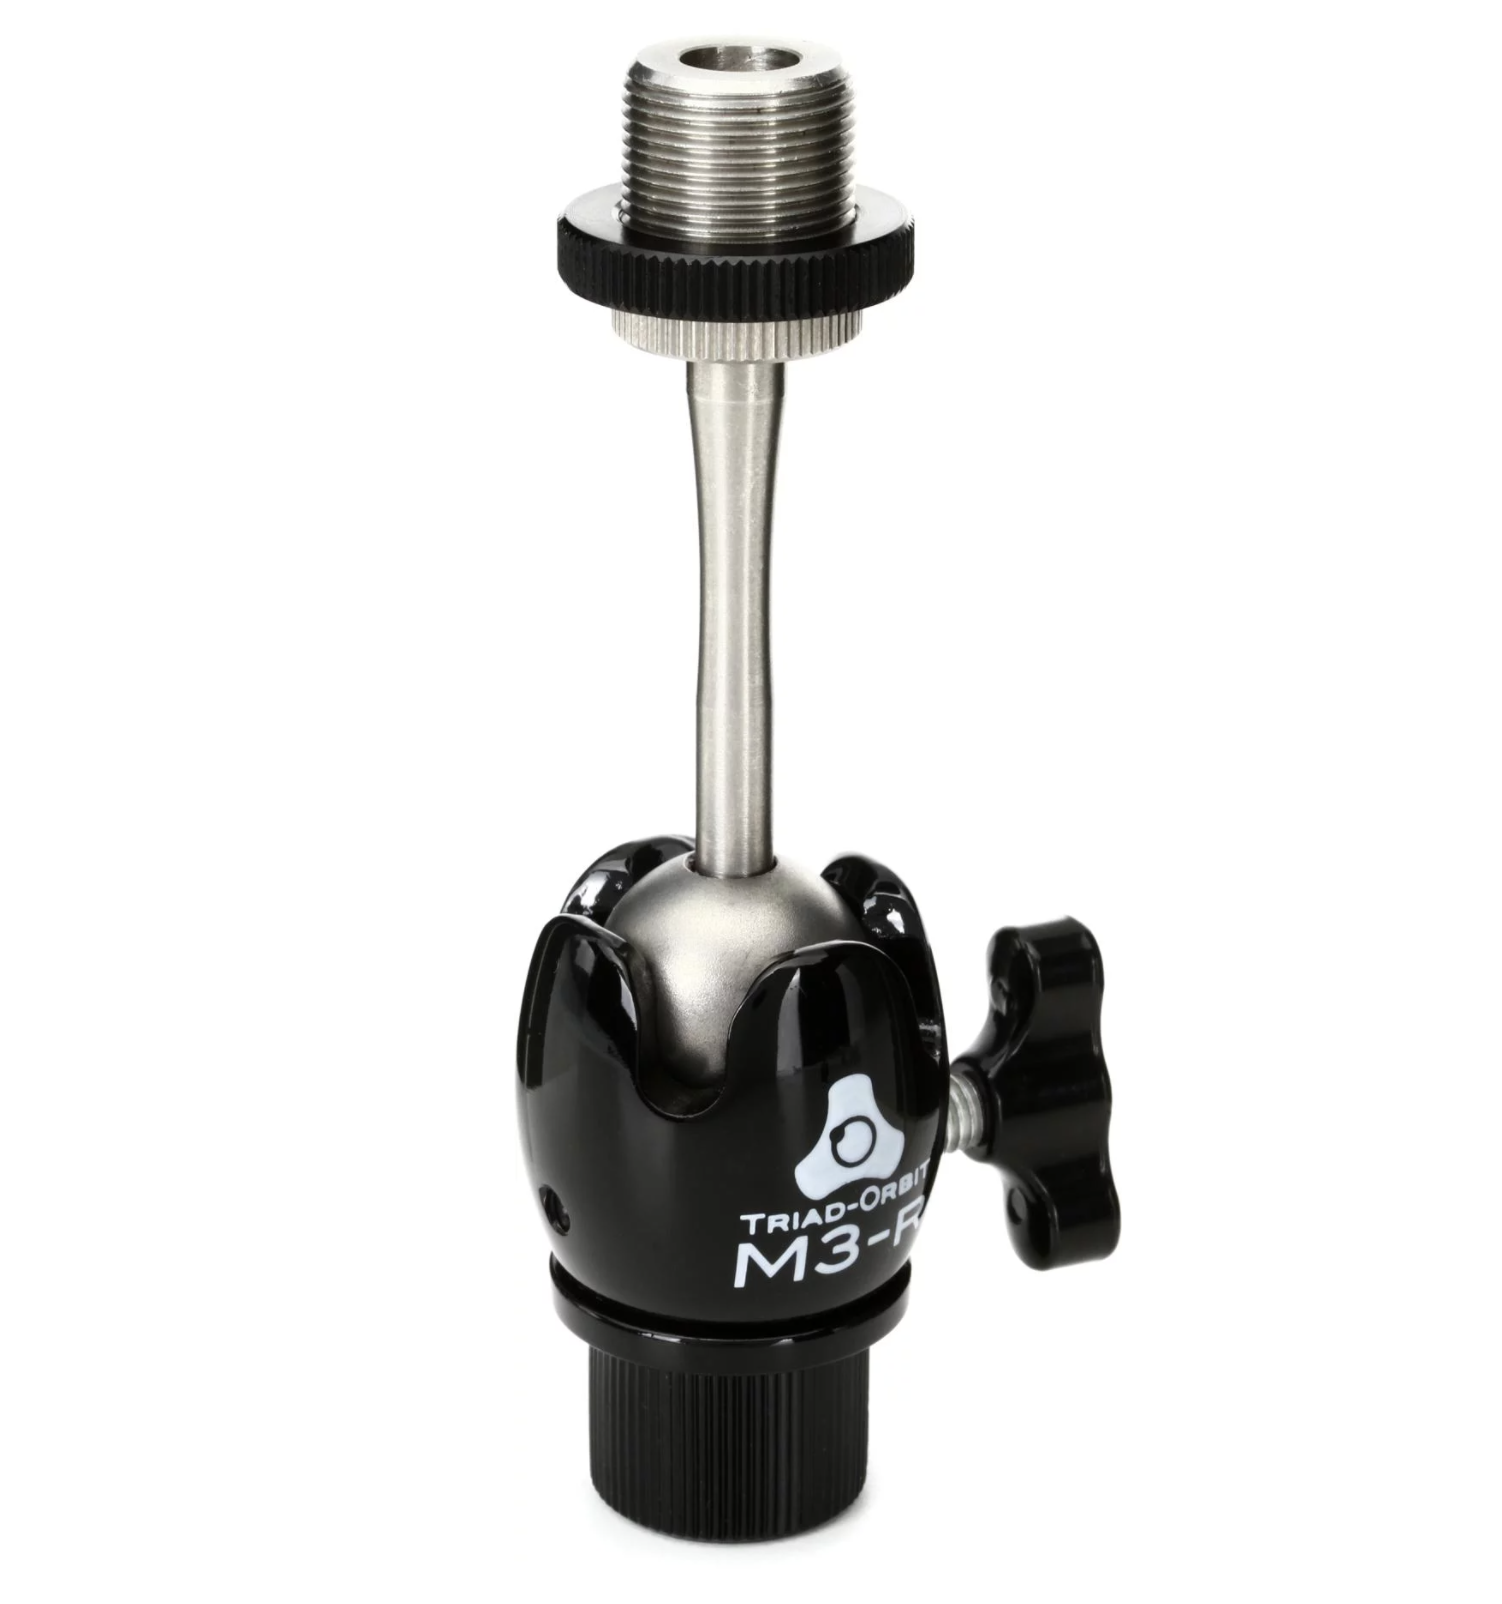 Triad Orbit Micro M3-R | Microphone Adaptor with 5/8